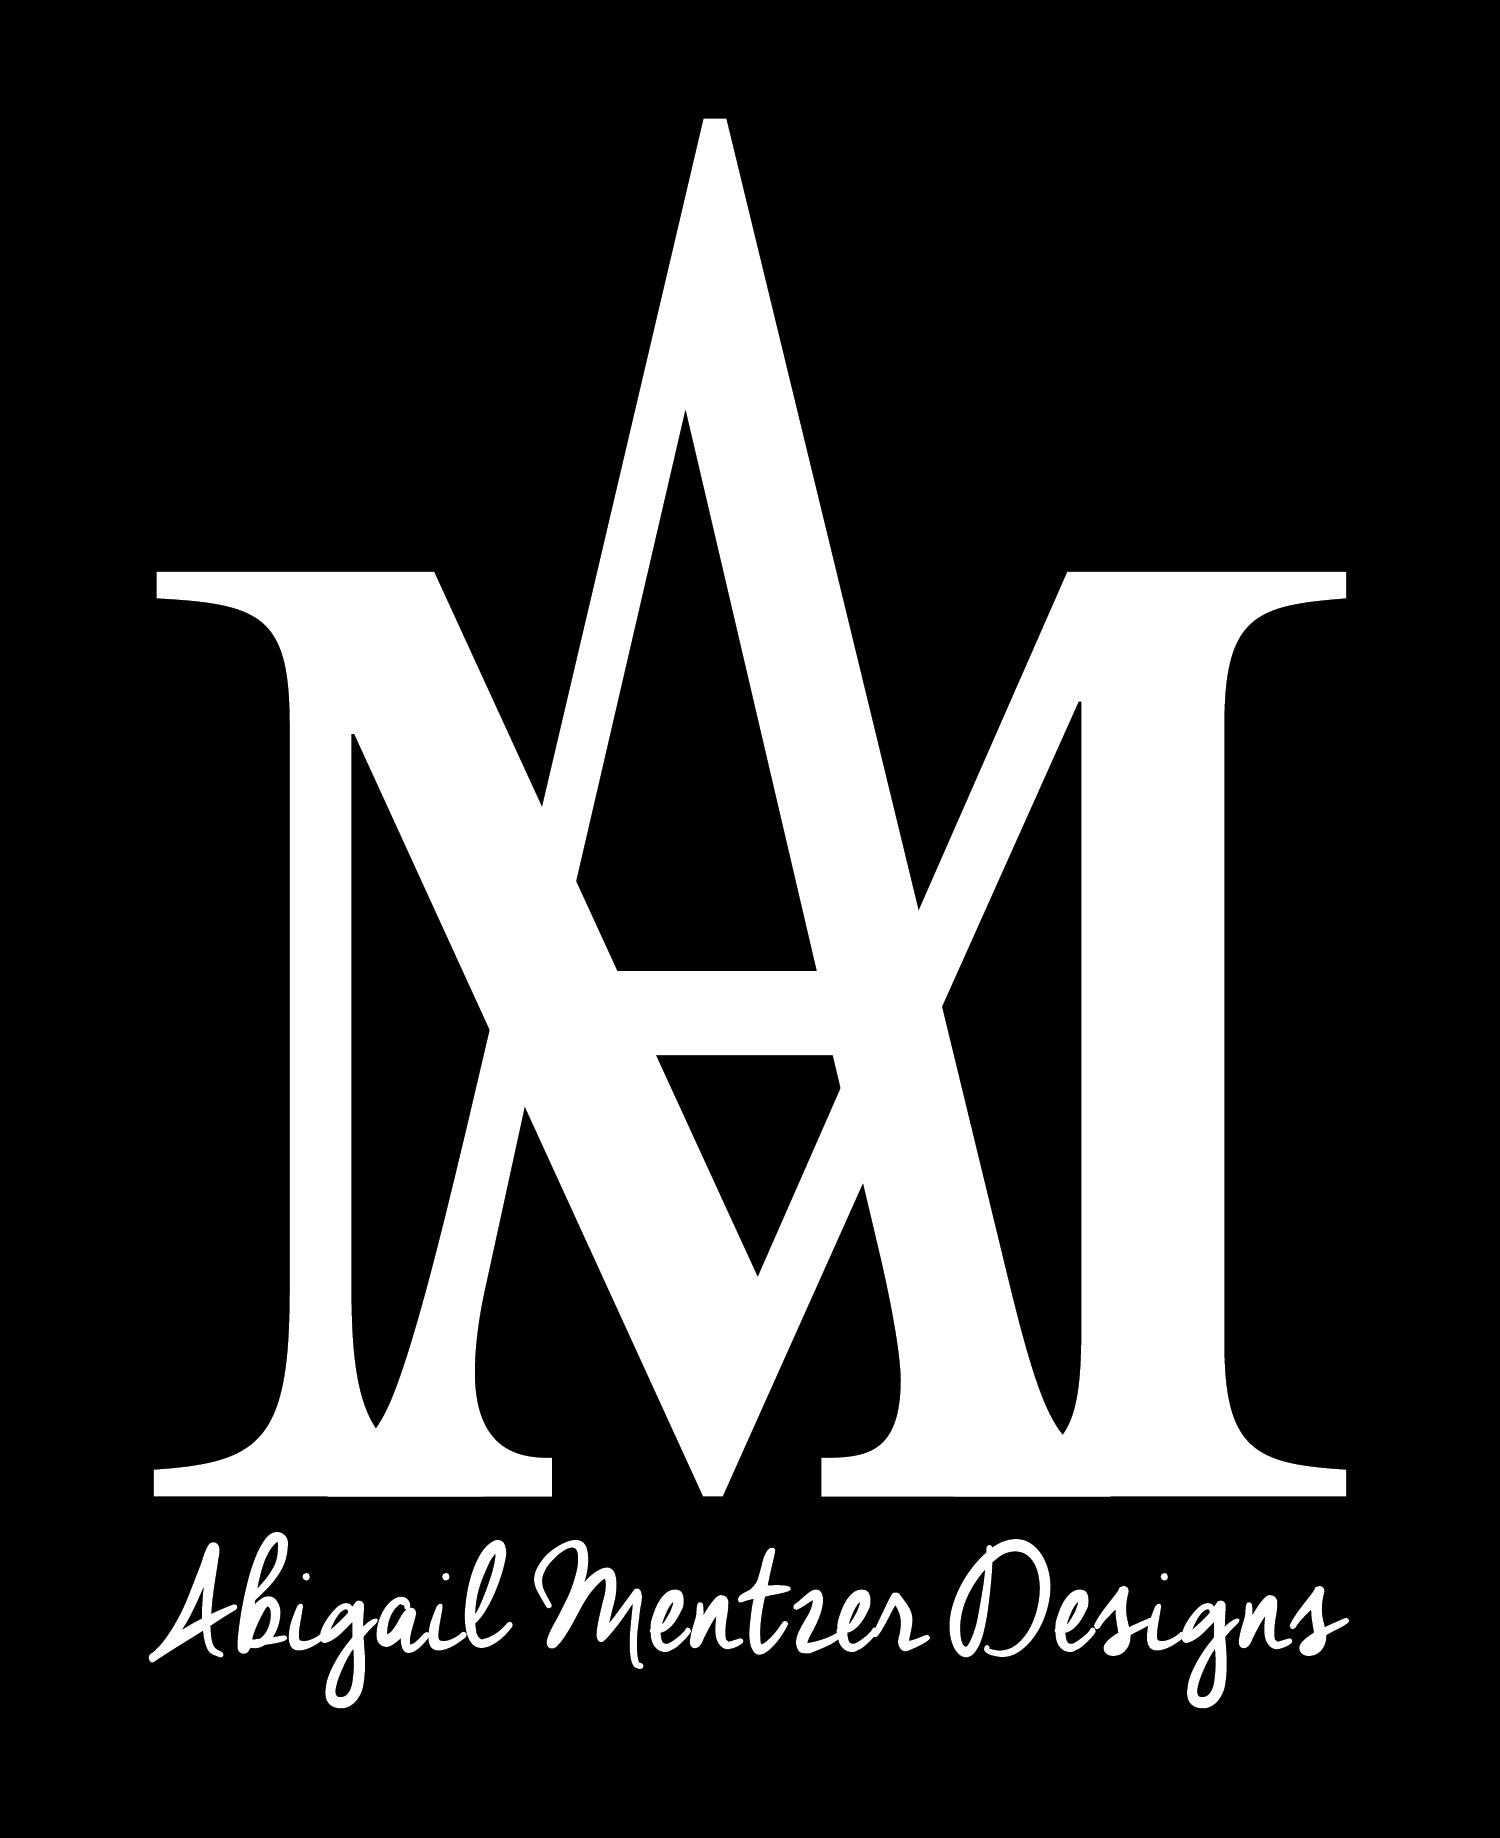 Black AMD Logo - Black - Abigail Mentzer Designs